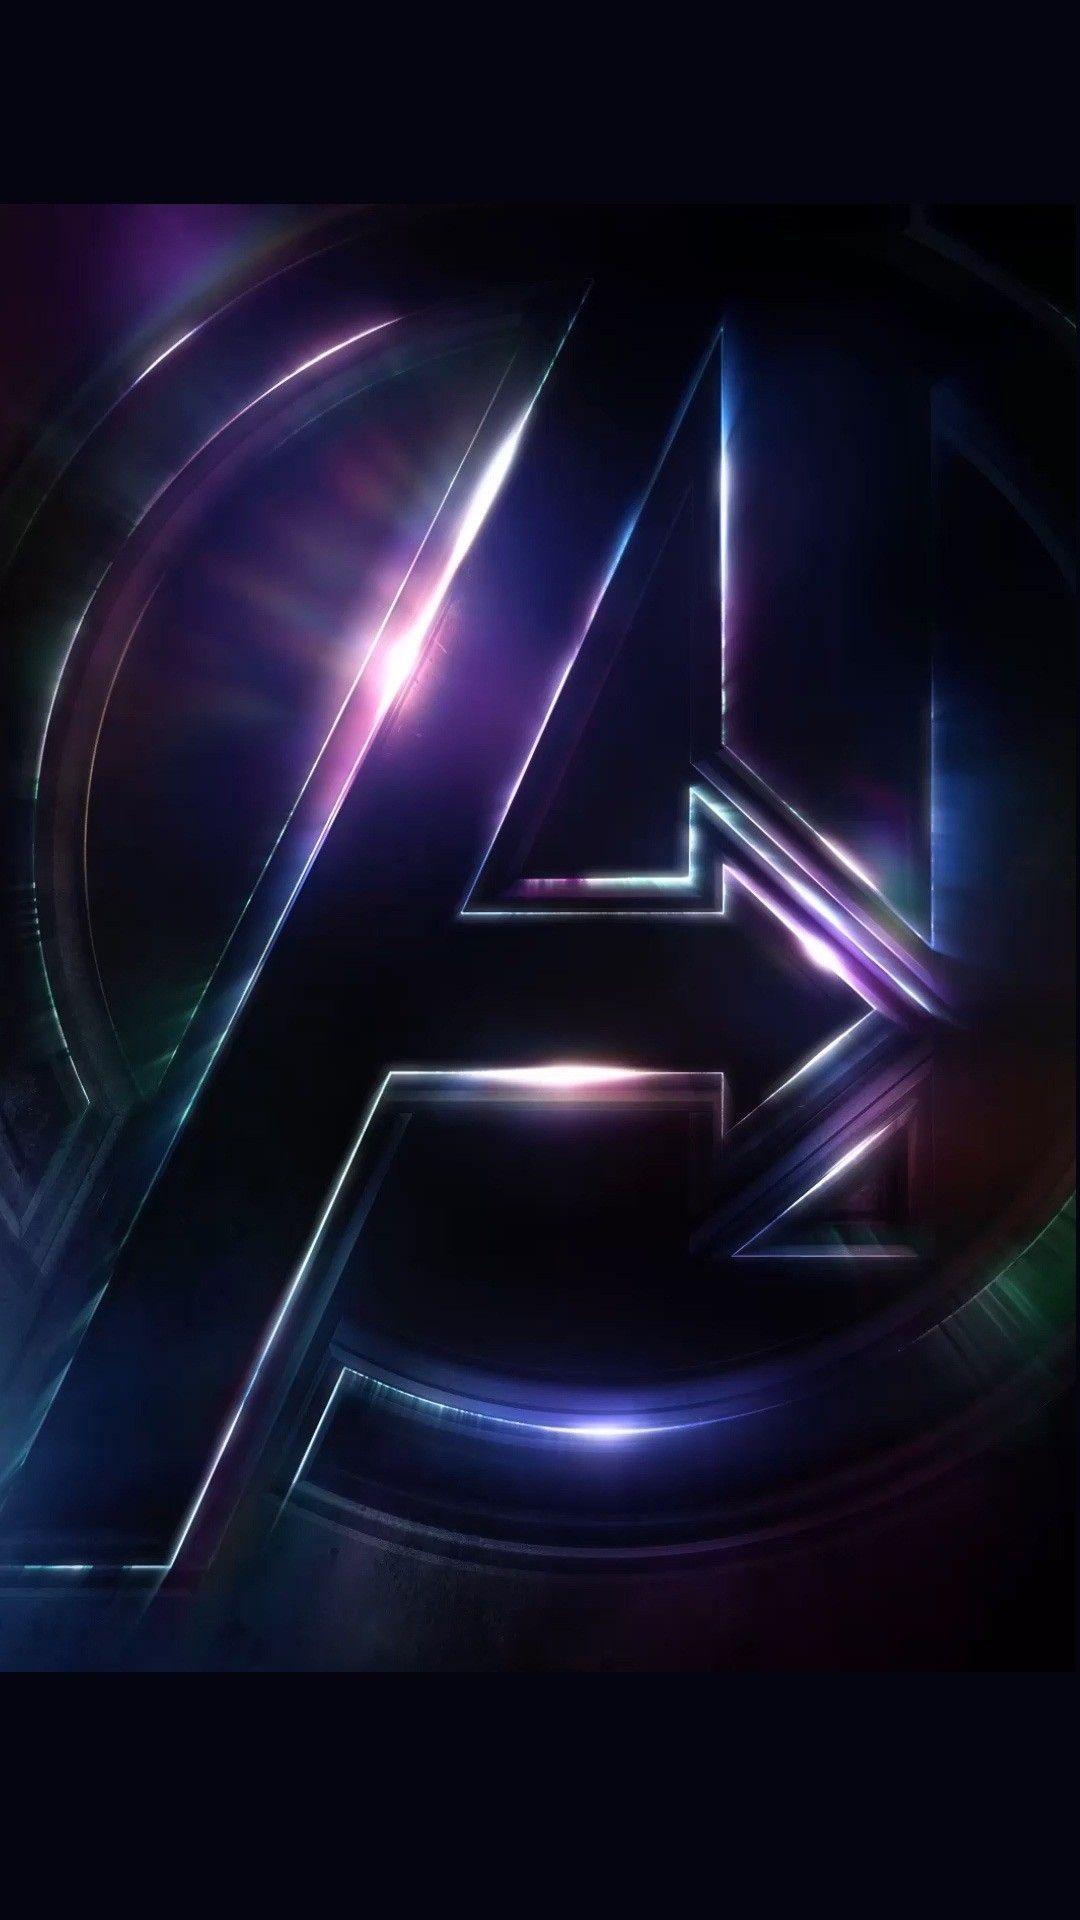 4K UHD Avengers Poster Infinity War Wallpaper Decor